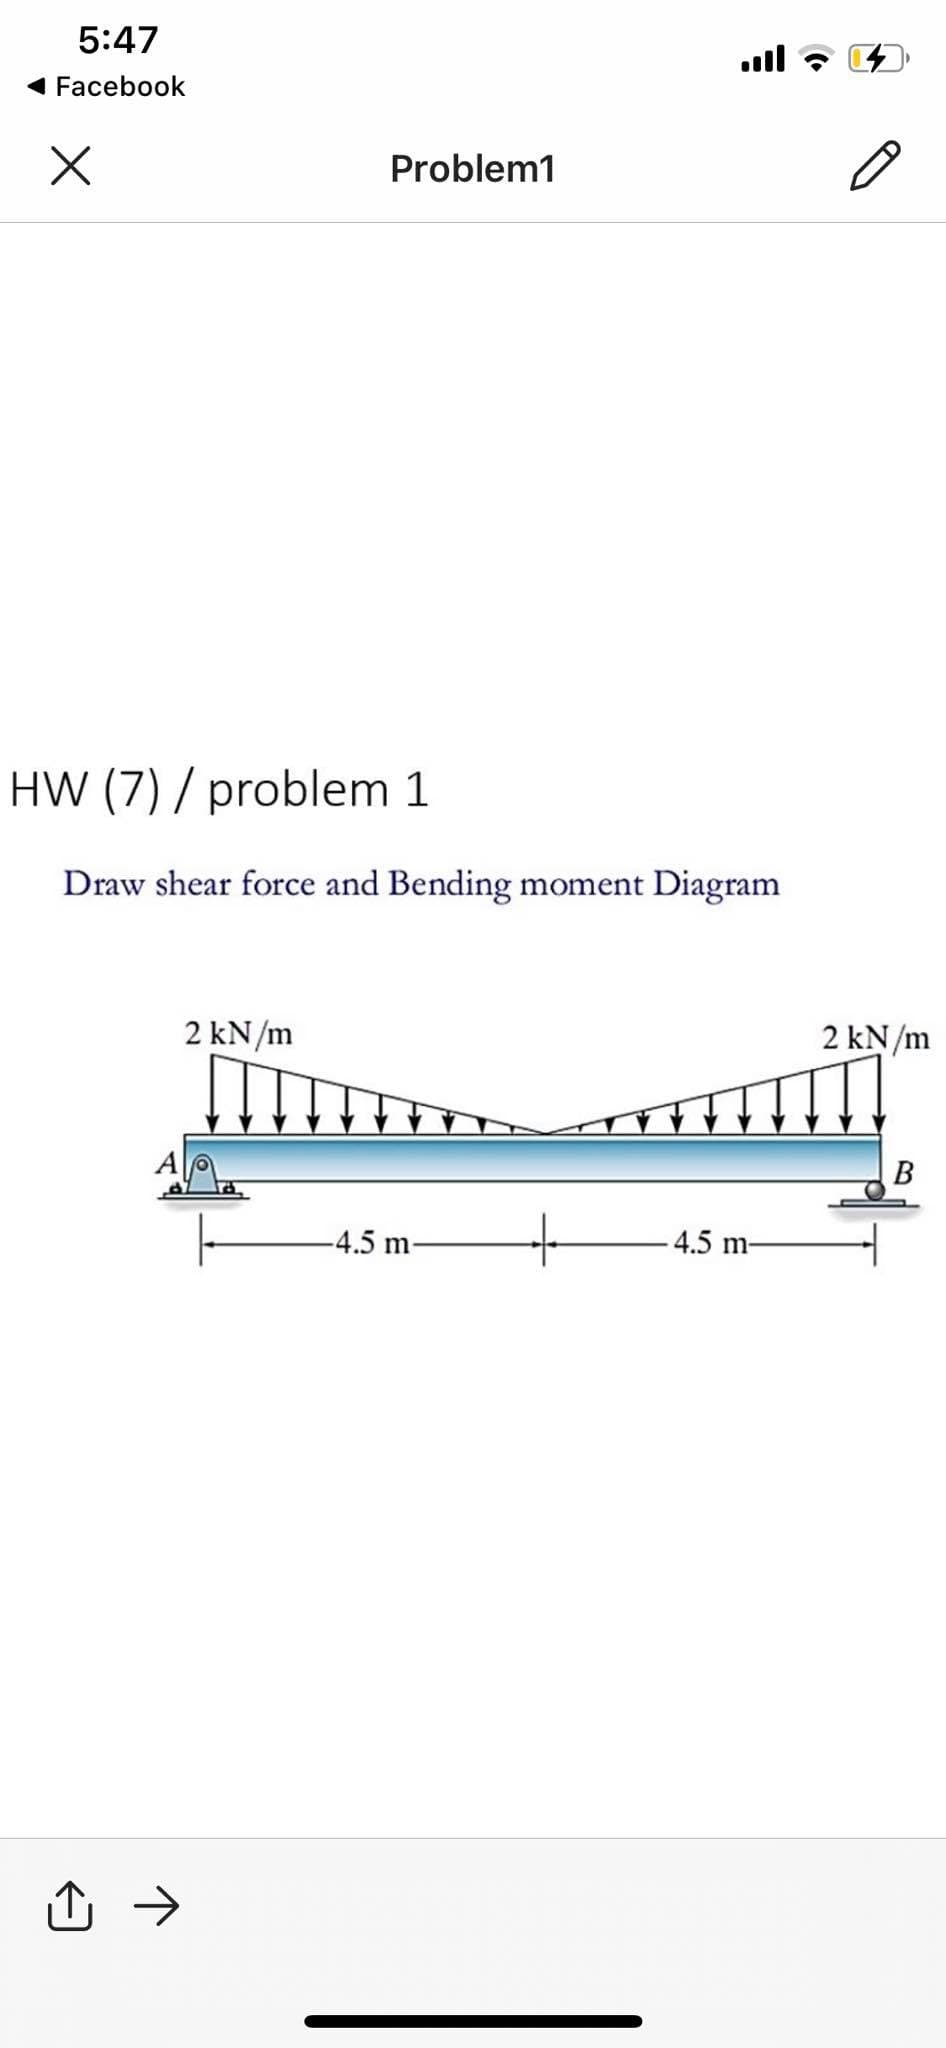 5:47
ll
Facebook
Problem1
HW (7) / problem 1
Draw shear force and Bending moment Diagram
2 kN/m
2 kN/m
B
-4.5 m-
-4.5 m-
->
